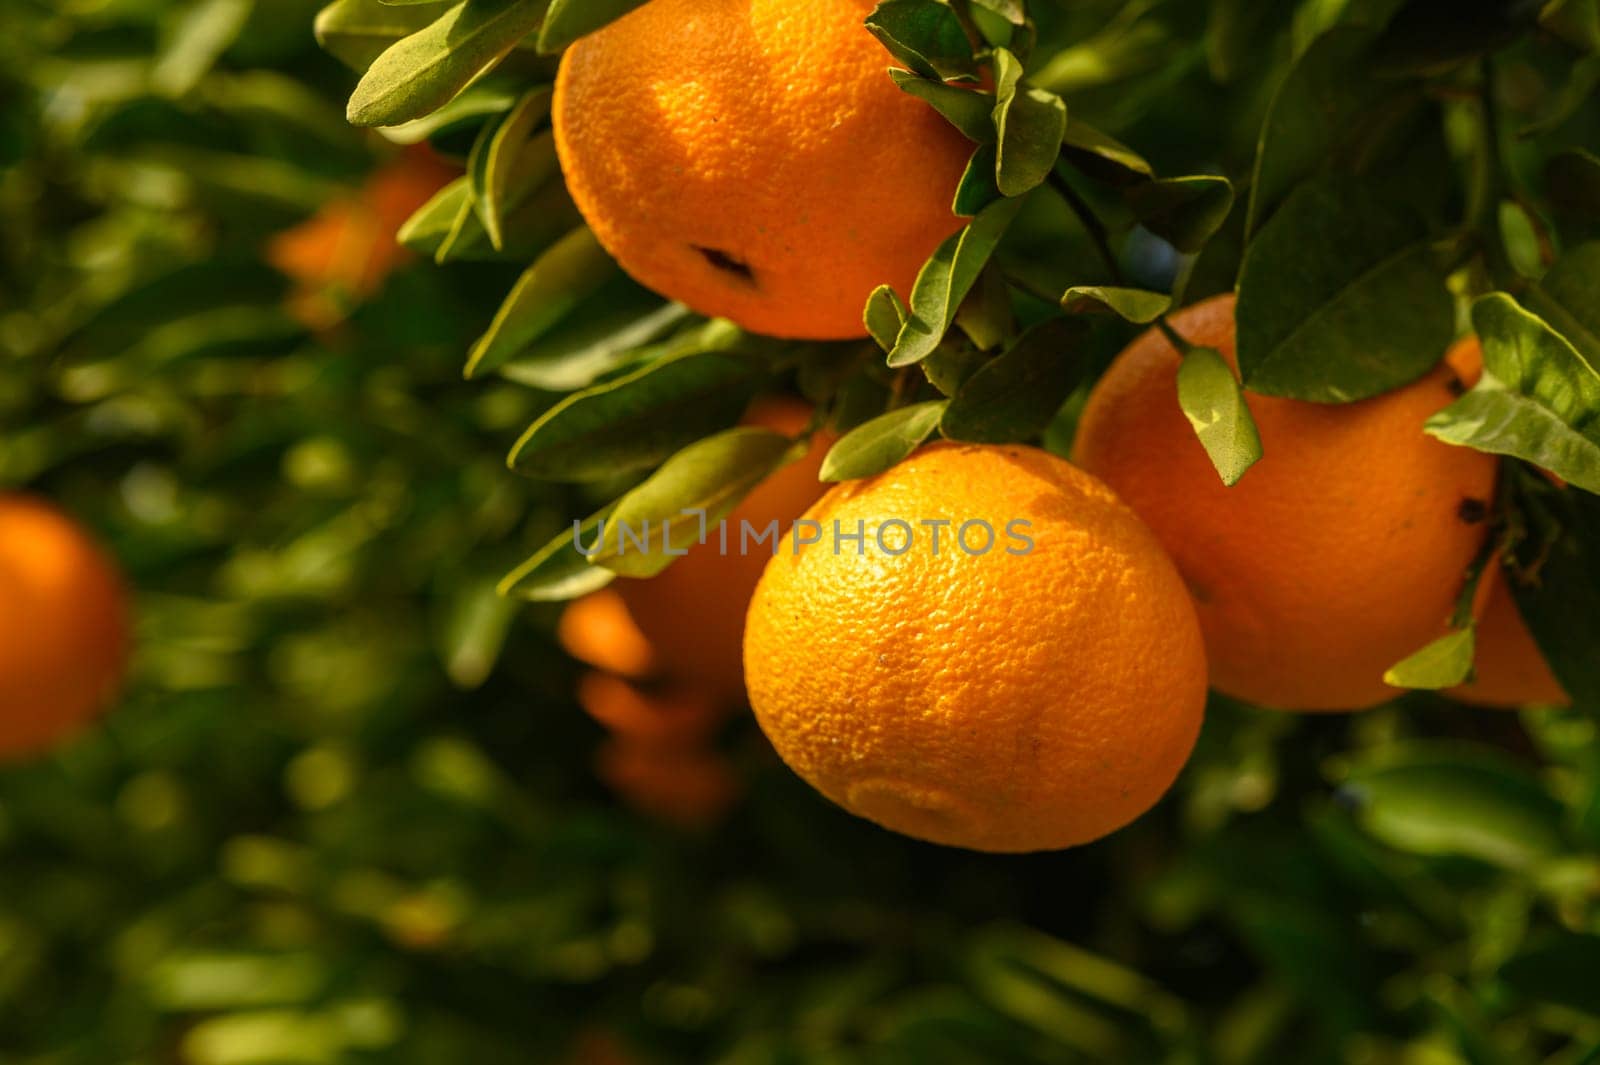 juicy fresh tangerines in a garden in Cyprus in winter 6